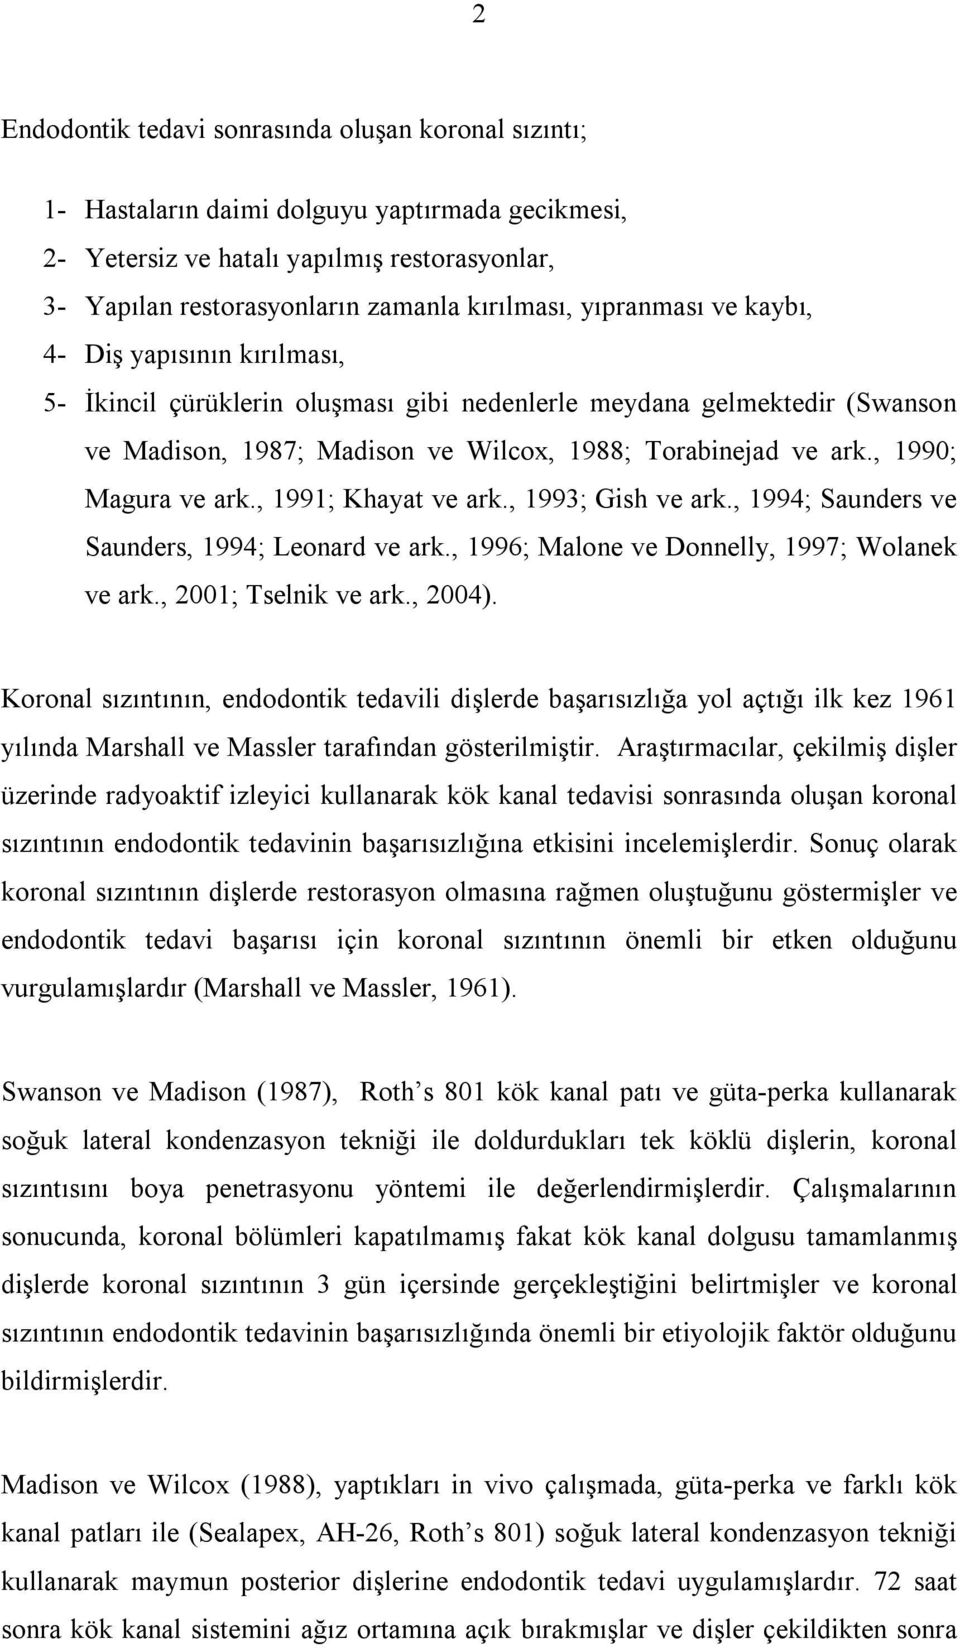 , 1990; Magura ve ark., 1991; Khayat ve ark., 1993; Gish ve ark., 1994; Saunders ve Saunders, 1994; Leonard ve ark., 1996; Malone ve Donnelly, 1997; Wolanek ve ark., 2001; Tselnik ve ark., 2004).